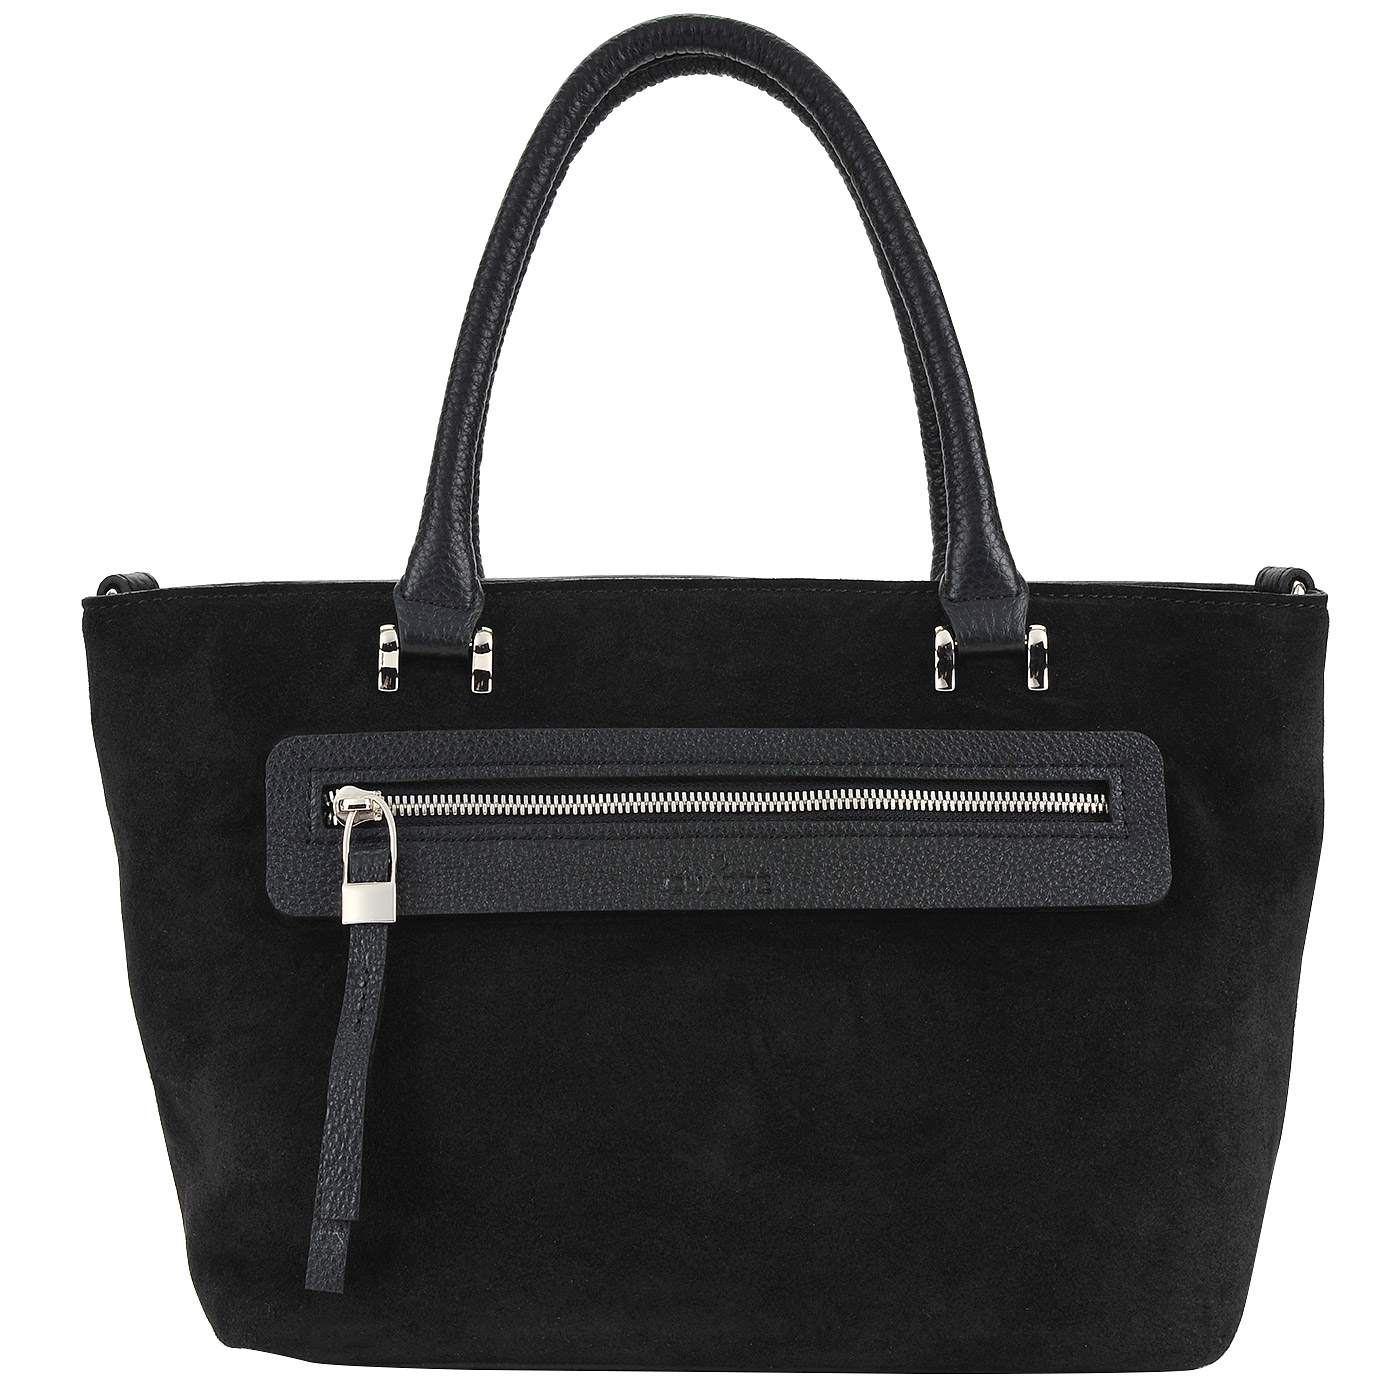 Chatte Черная женская сумка со съемным плечевым ремешком